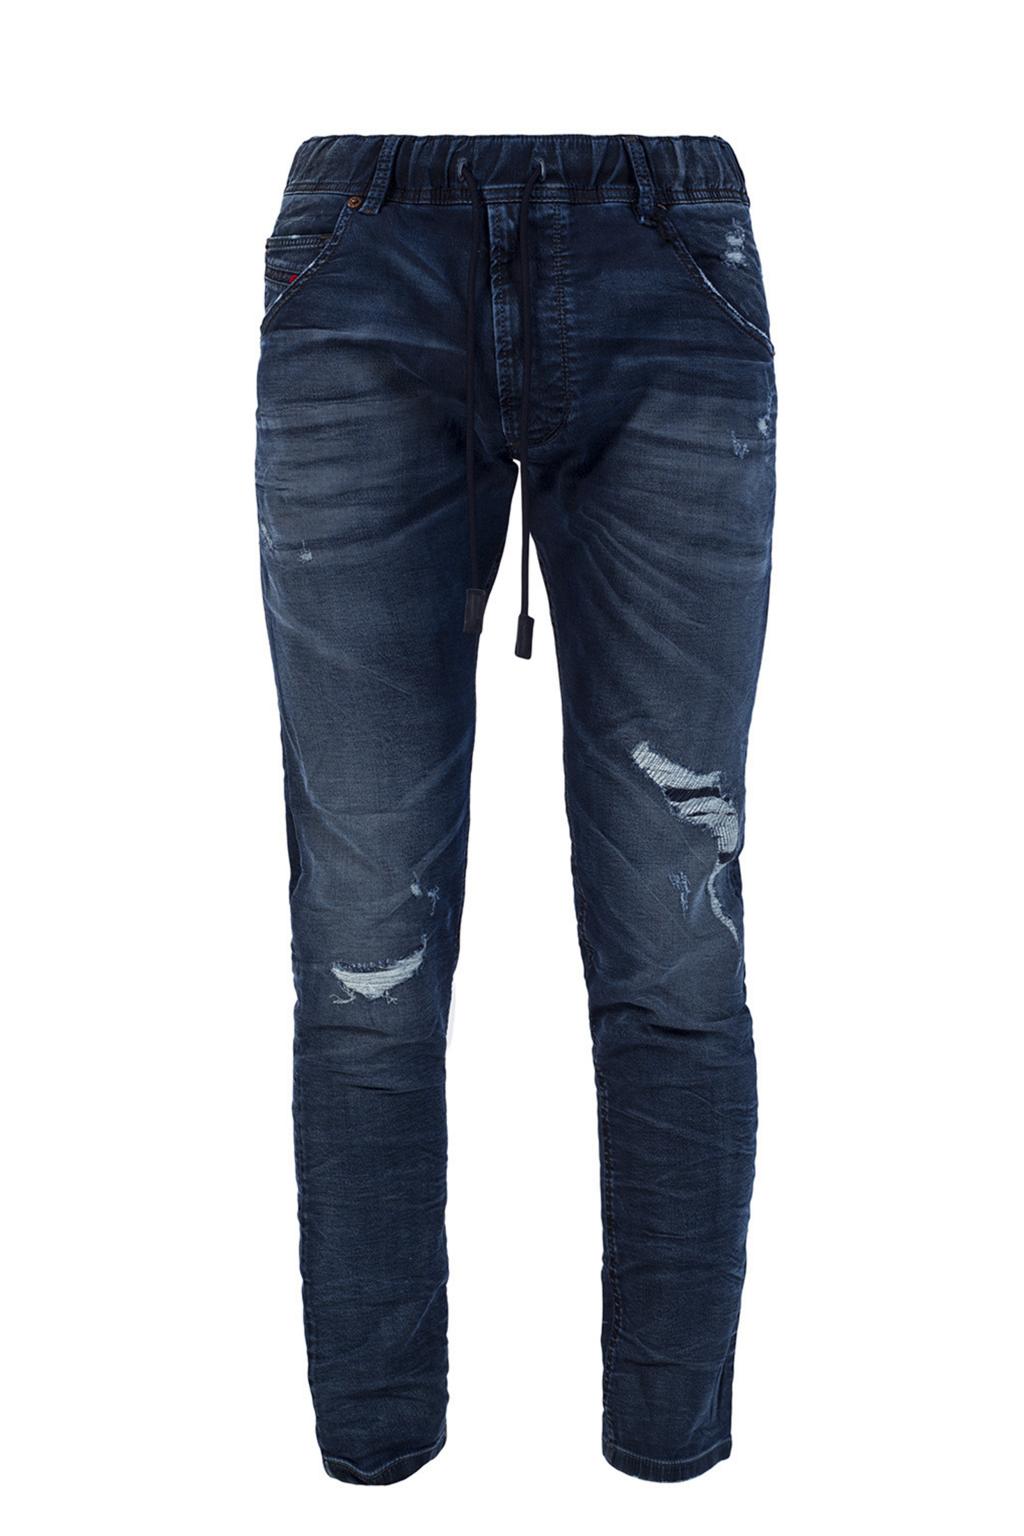 Diesel 'Krooley-Ne' jeans | Men's Clothing | Vitkac